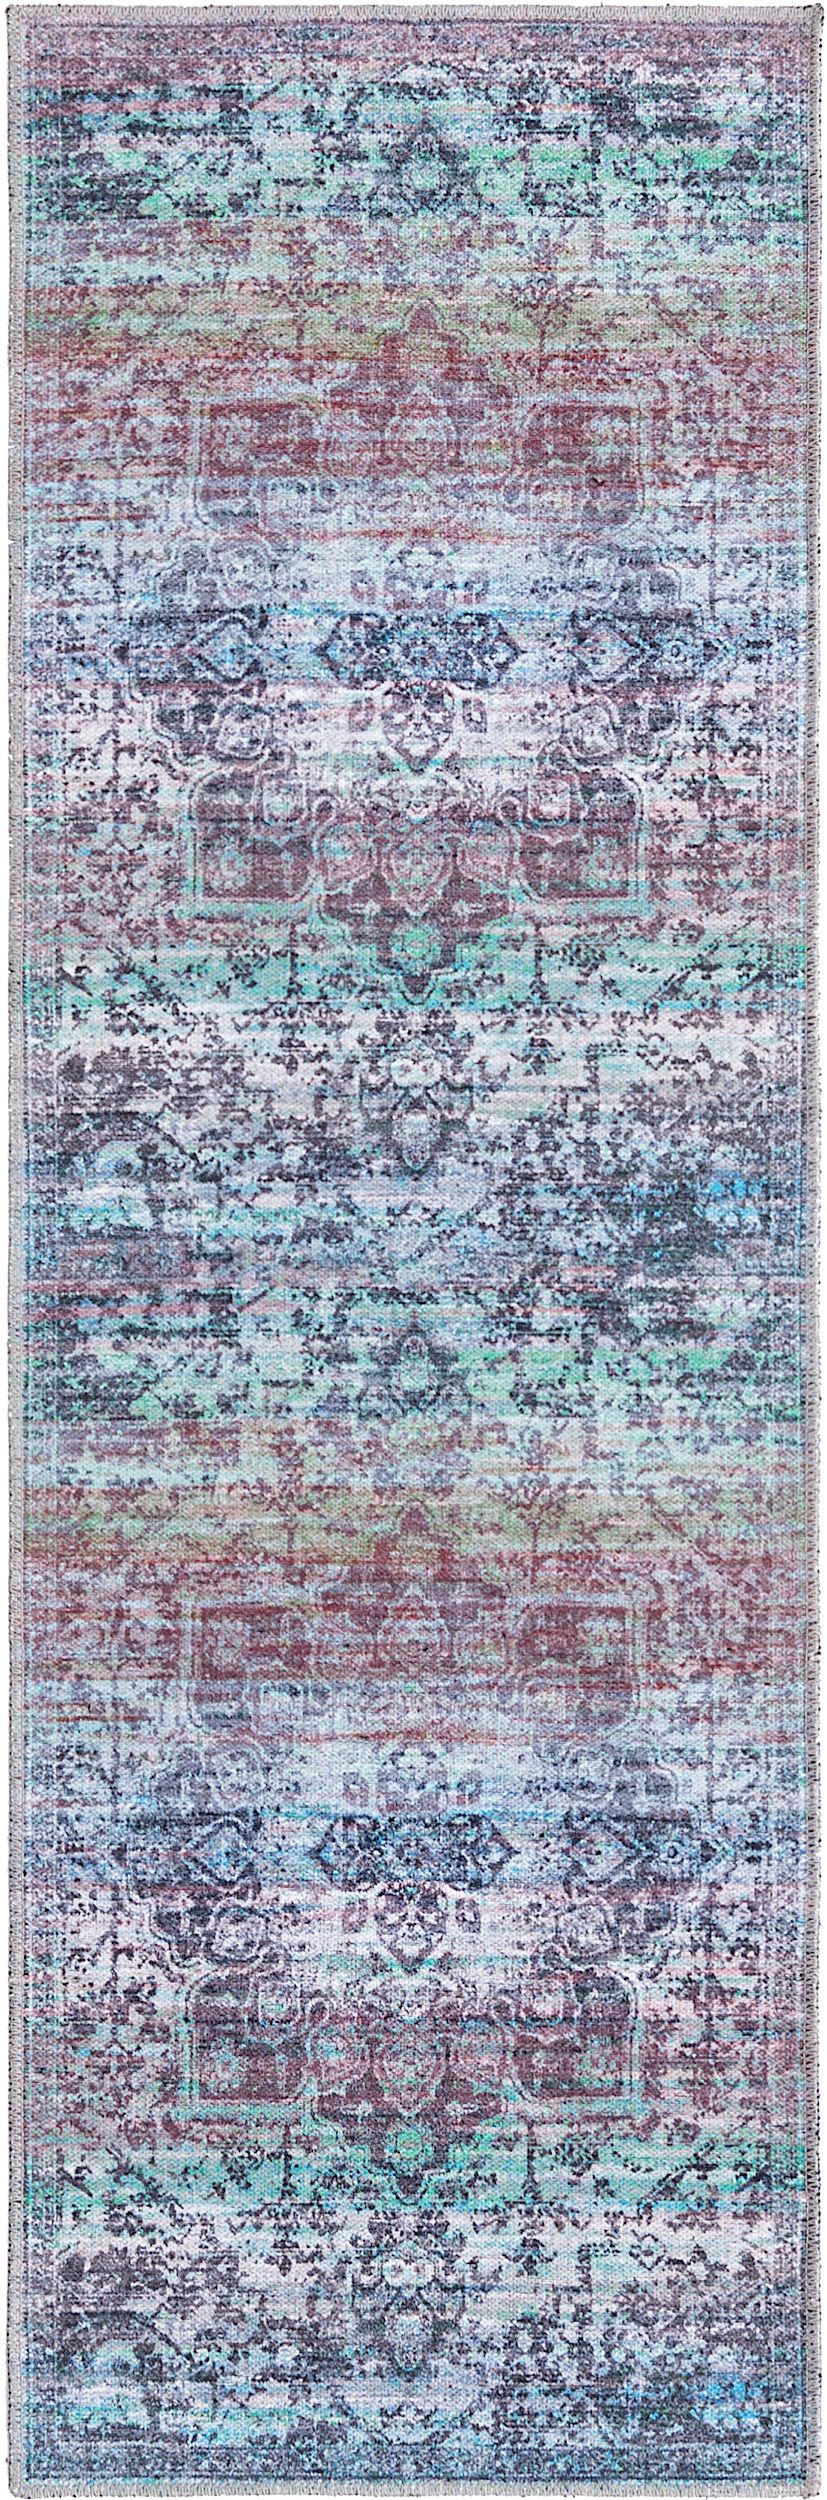 rugpal araya traditional area rug collection